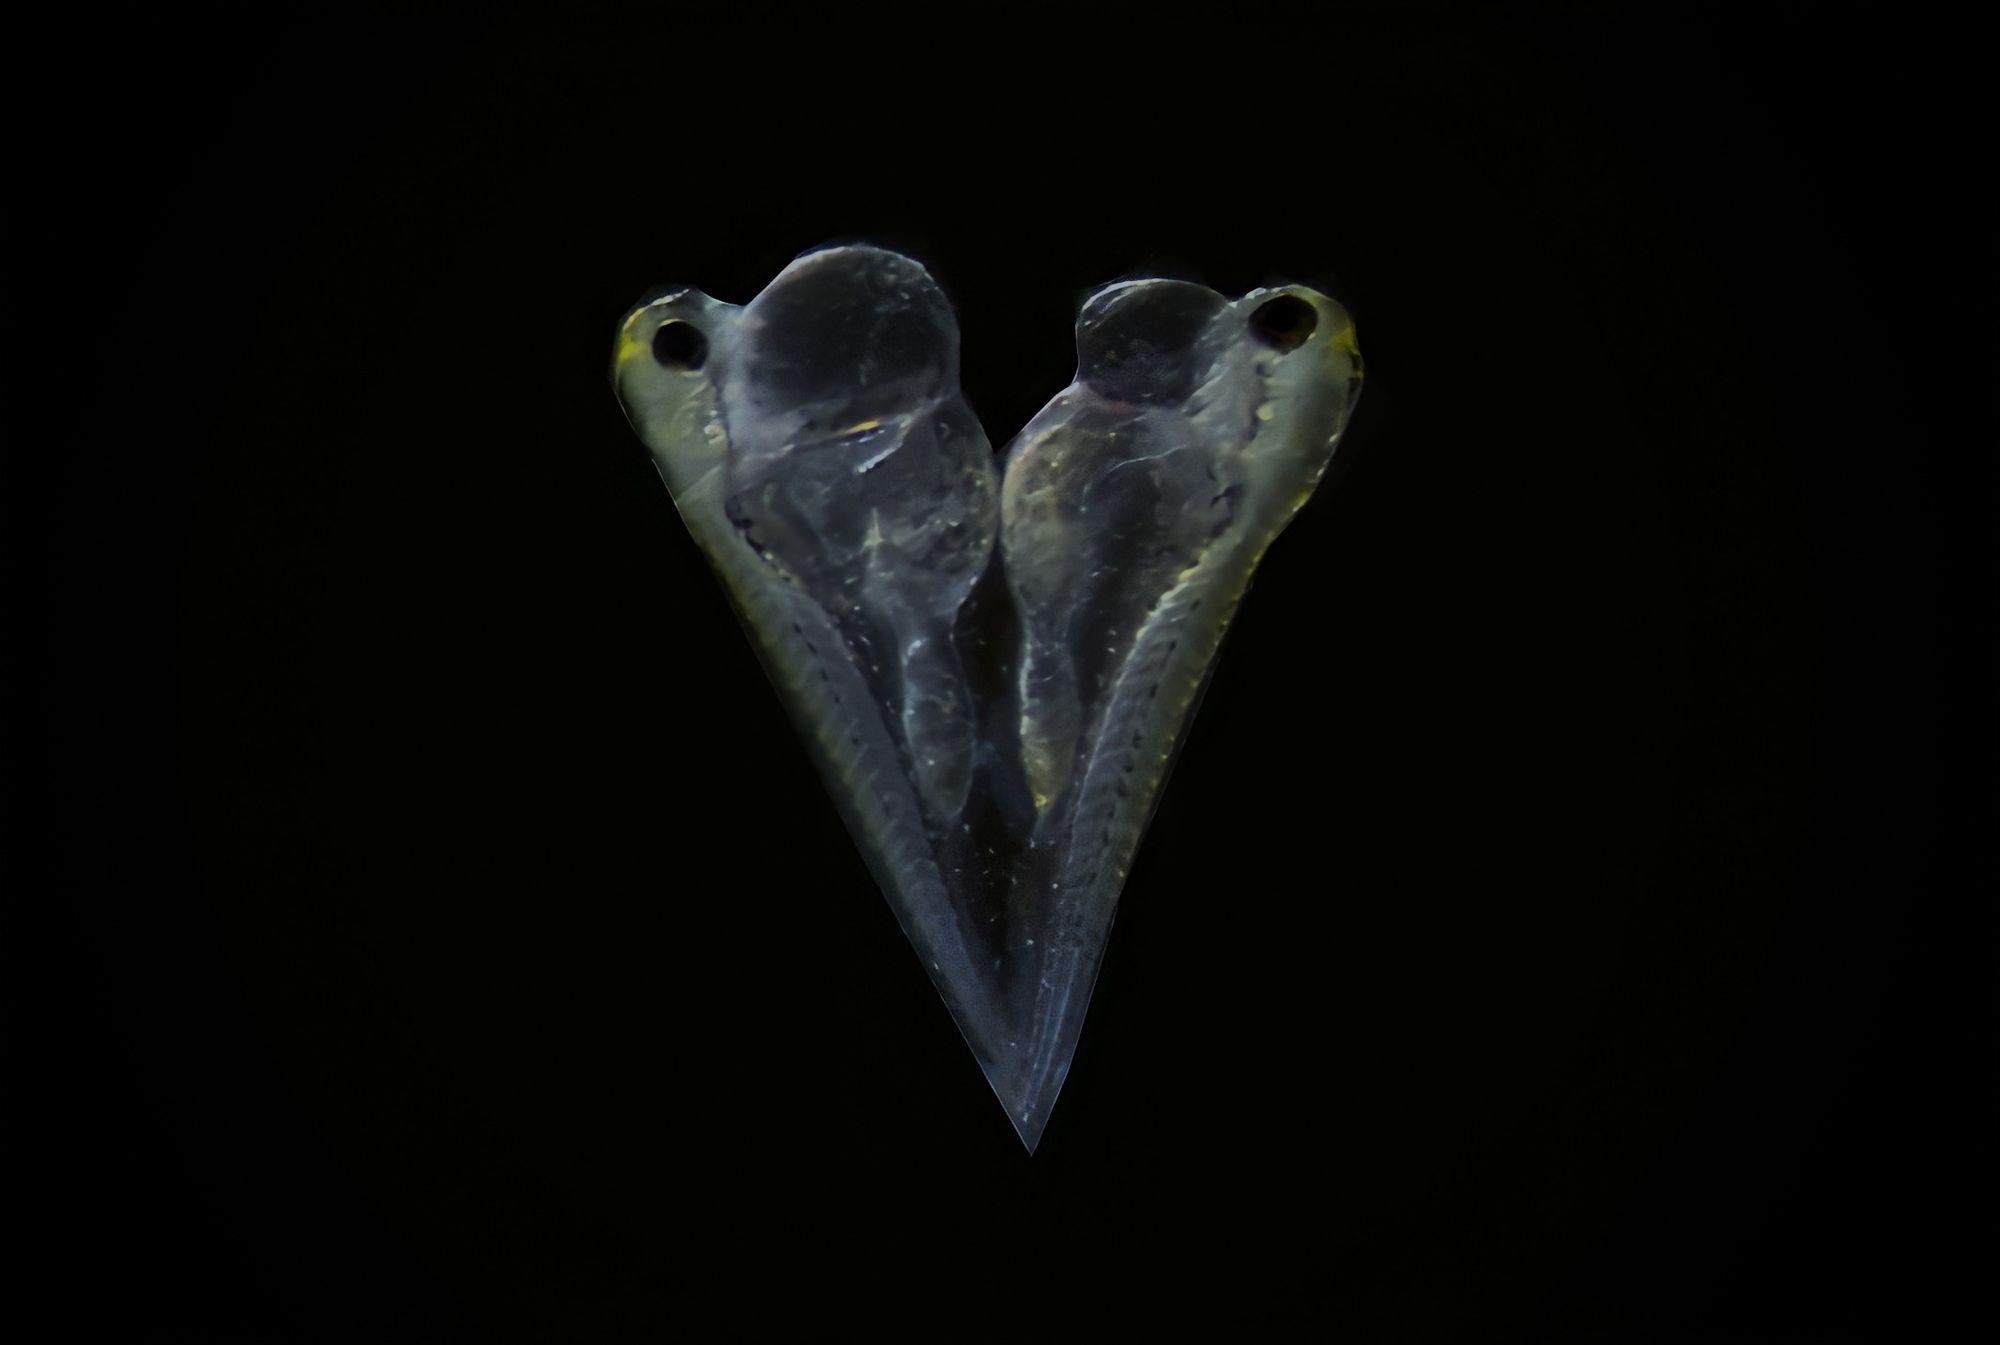 Malformed zebrafish larvae facing each other, forming a heart shape